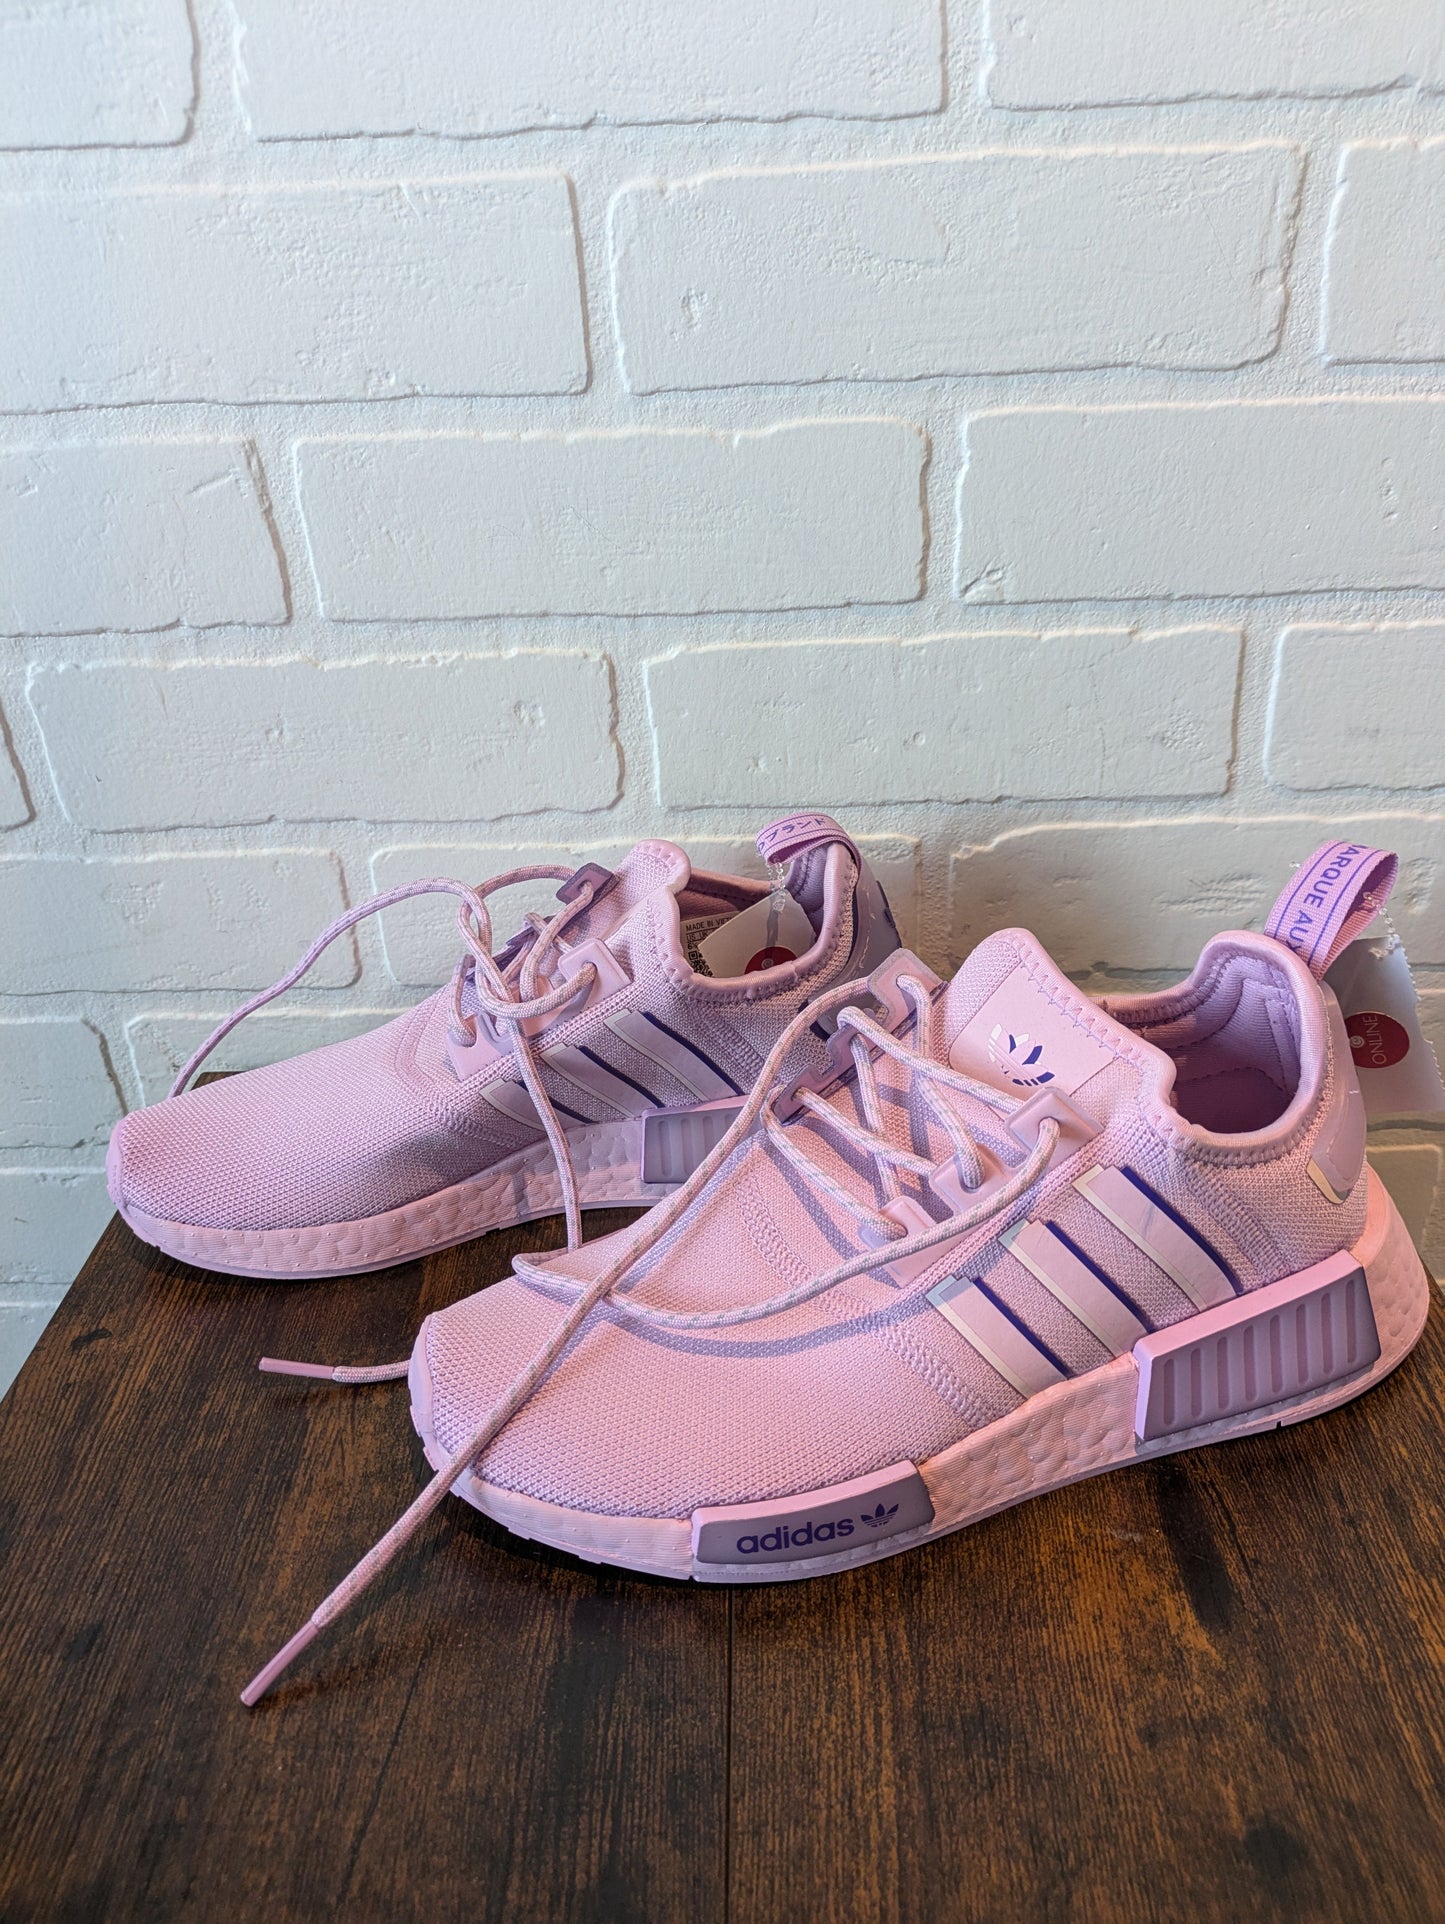 Purple Shoes Athletic Adidas, Size 6.5